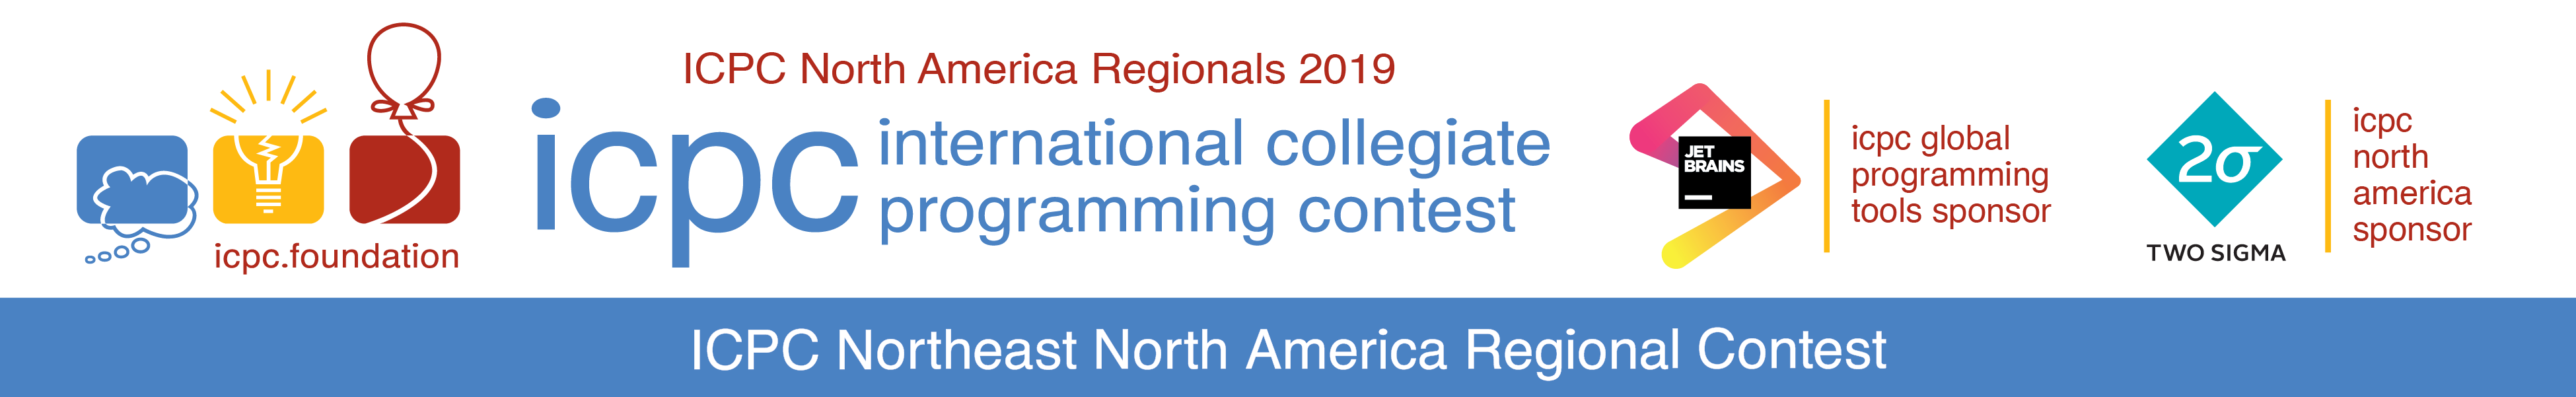 ICPC Northeast North America Regional Practice Contest 2019